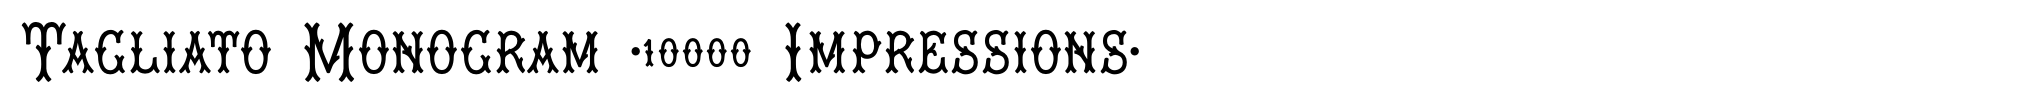 Tagliato Monogram (10000 Impressions) image